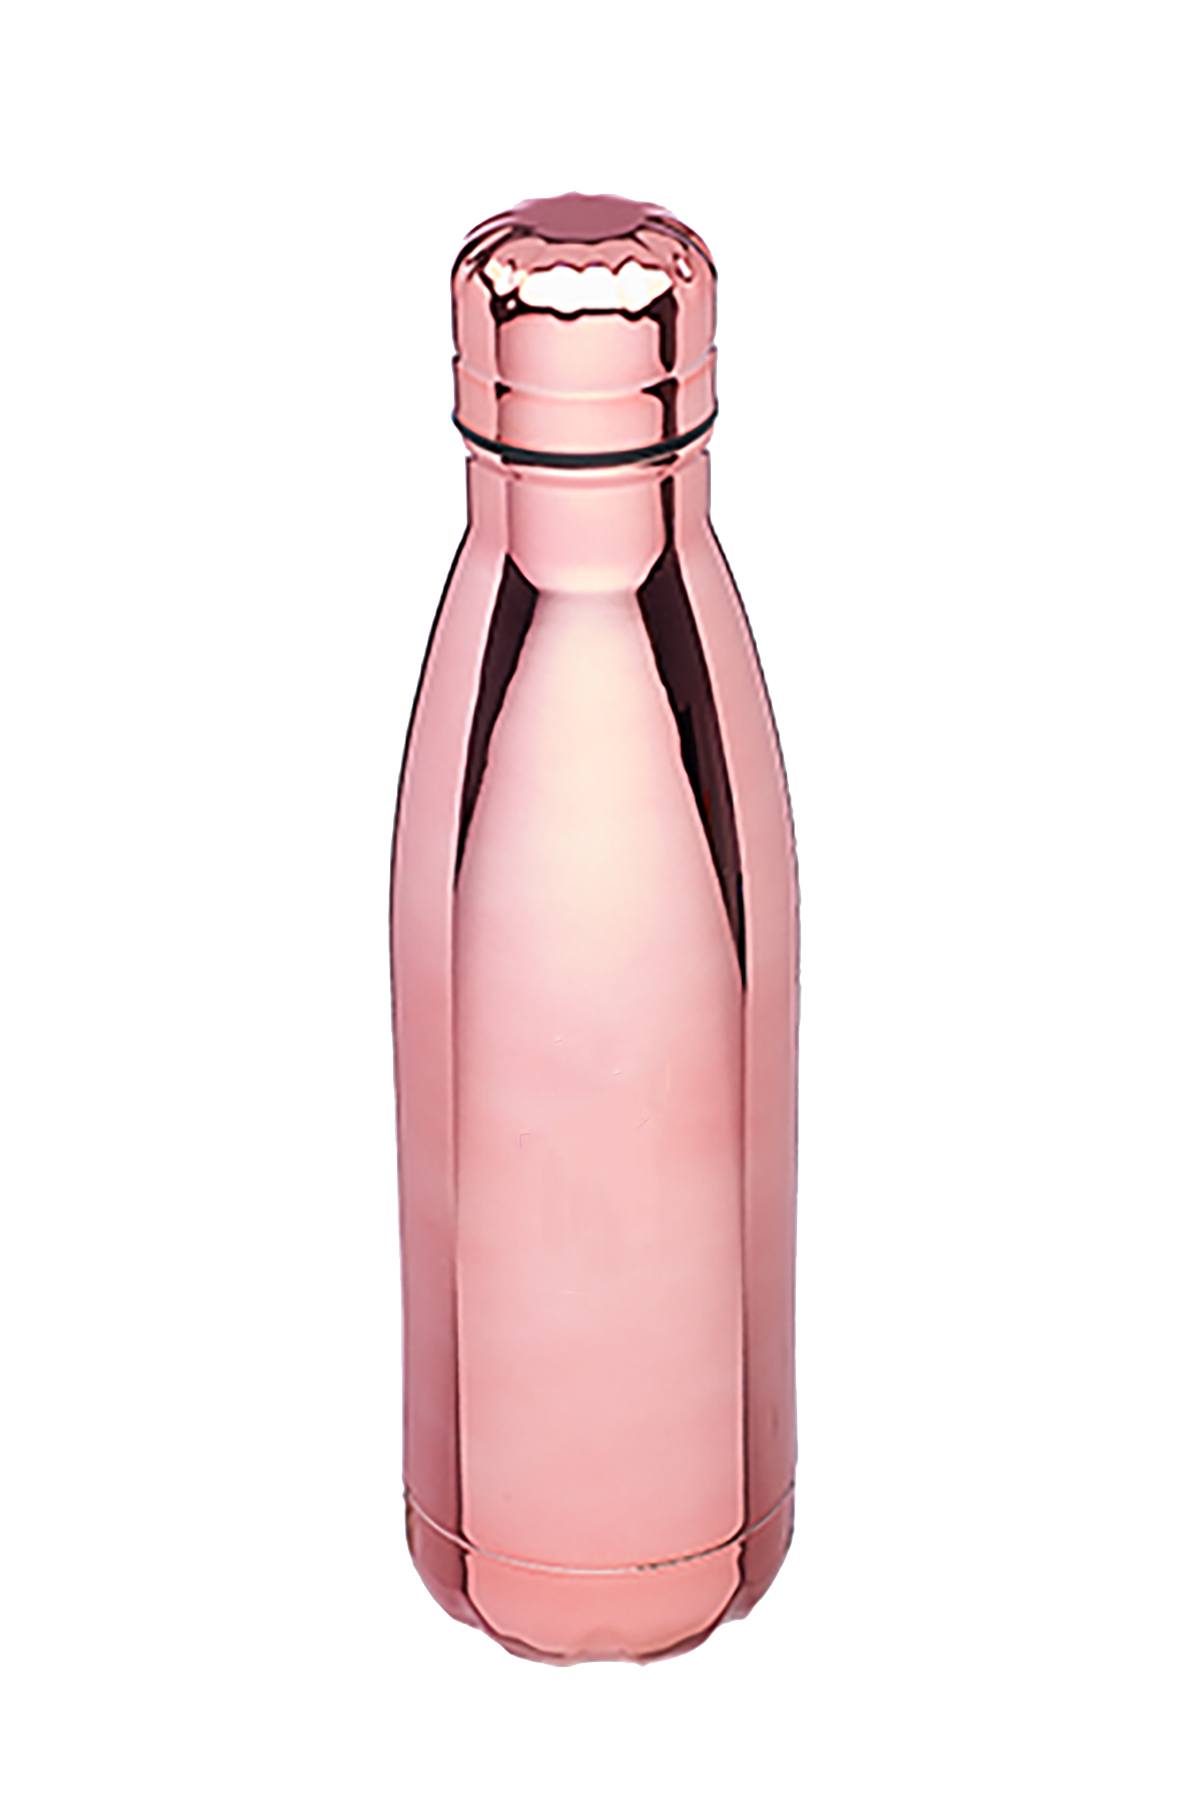 TwelveNYC Metallic-Pink 16oz Insulated Stainless Steel Water Bottle